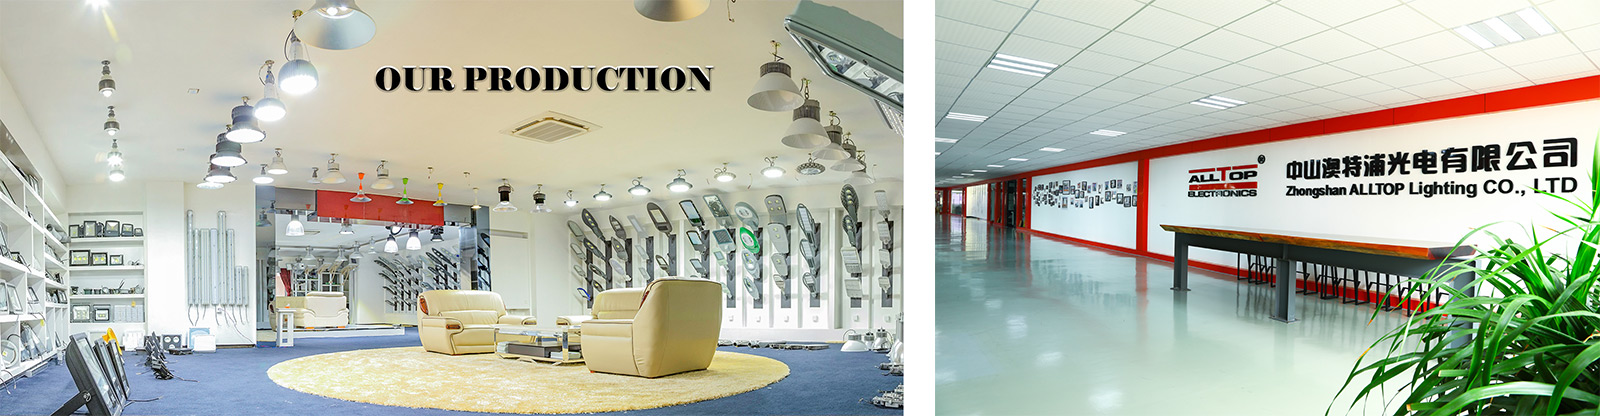 multi-functional solar lighting system by-bulk indoor lighting-7